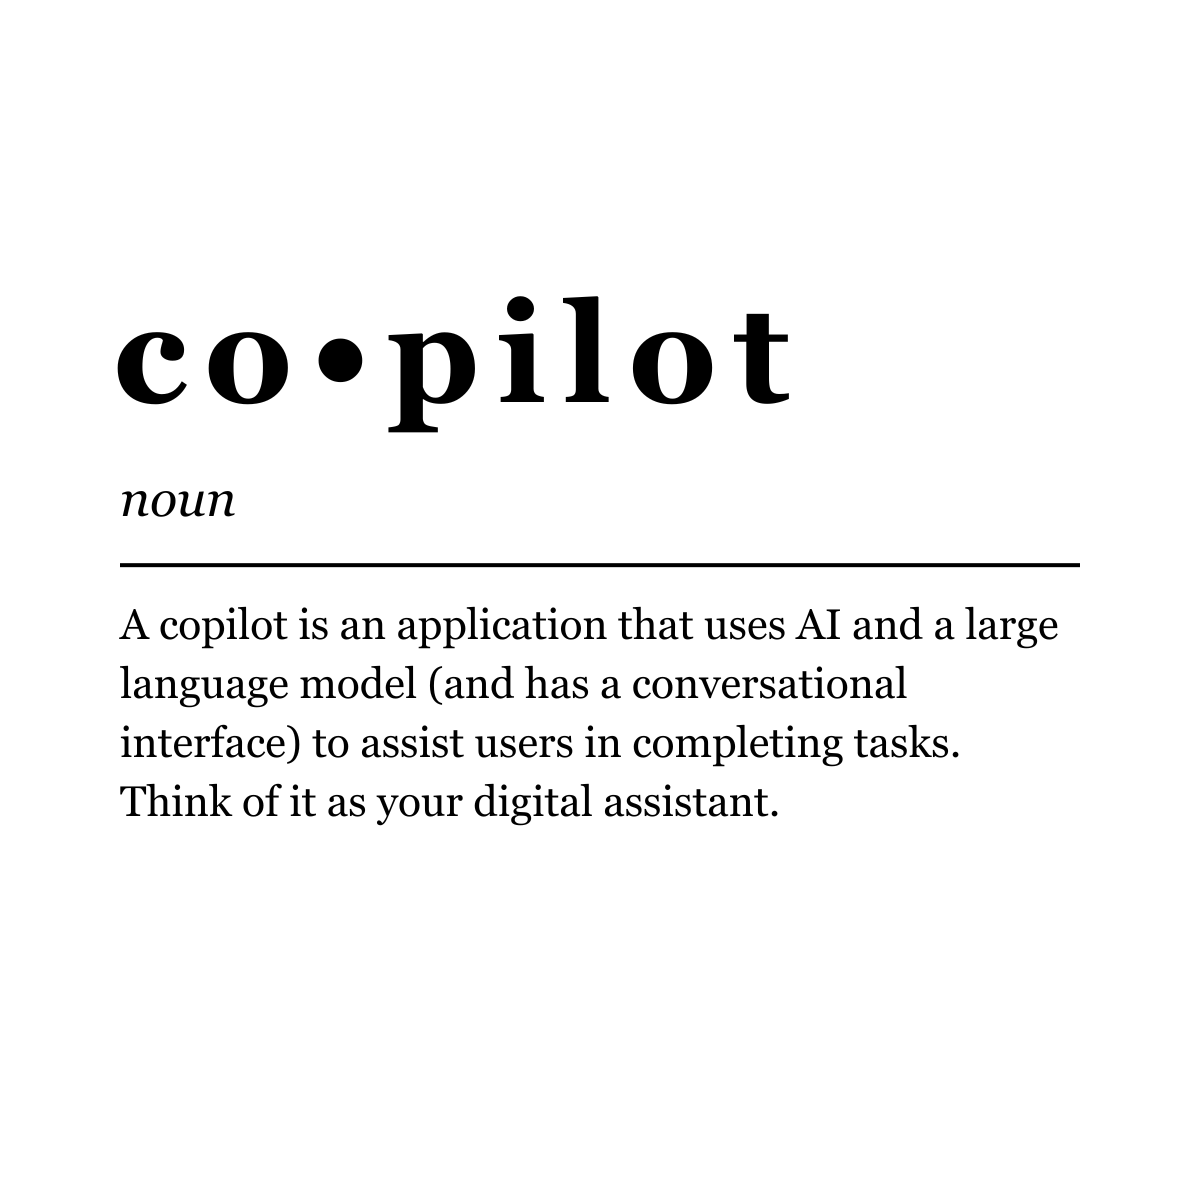 What is a copilot?